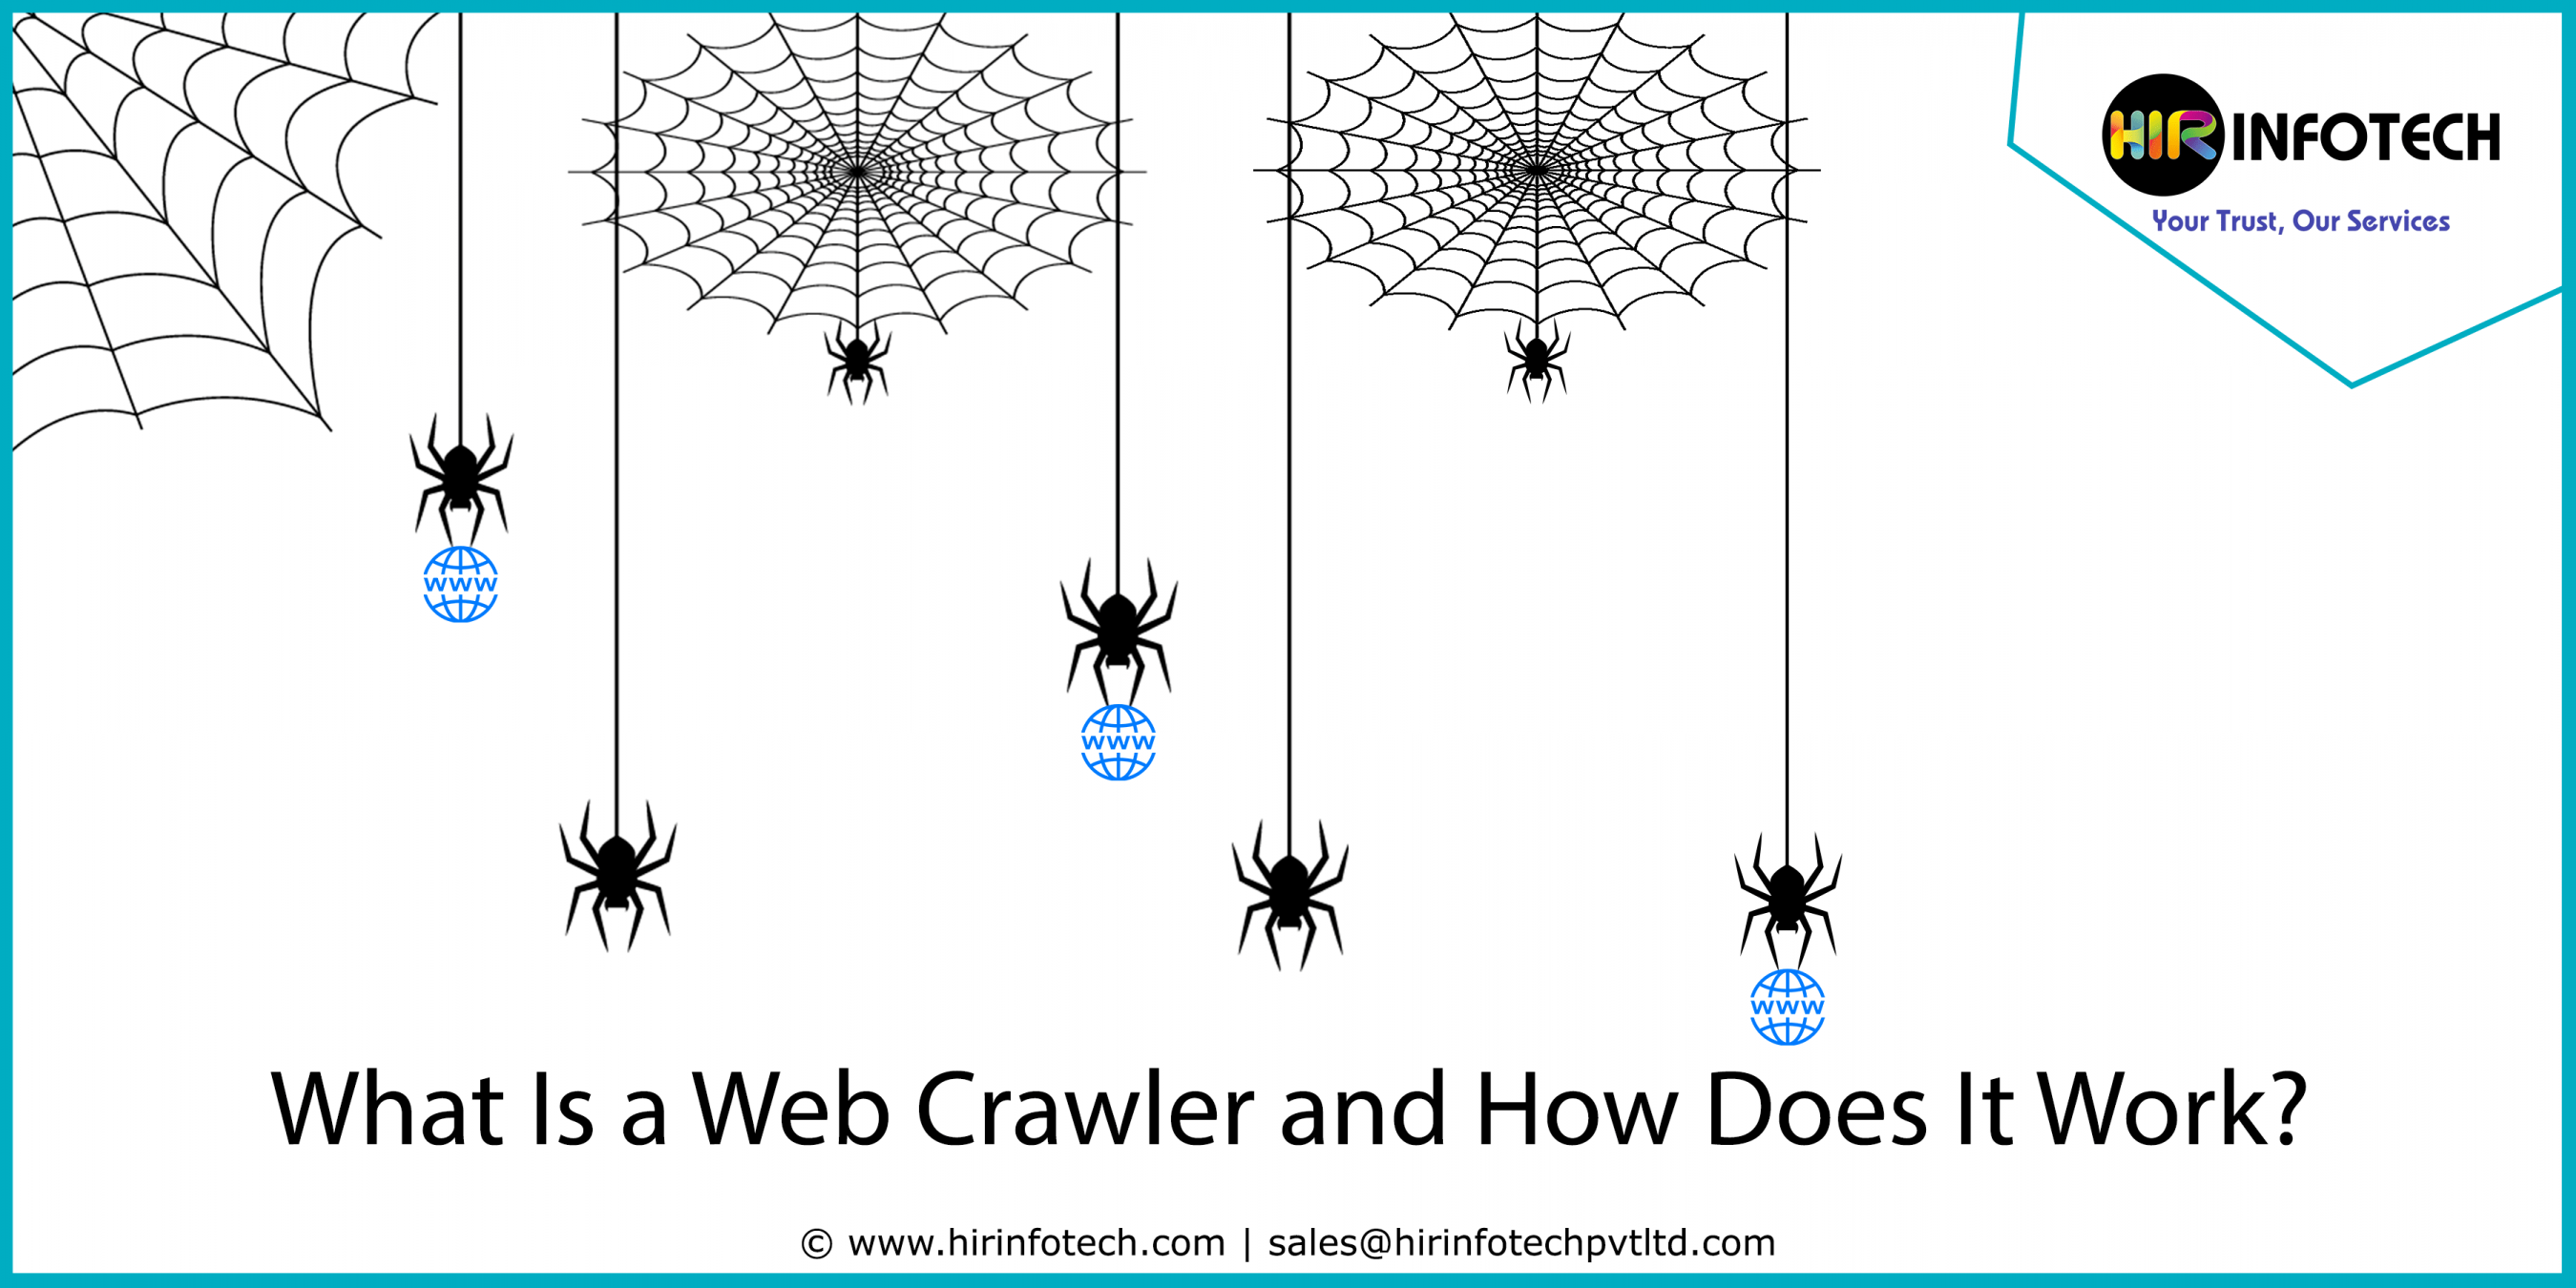 #Crawler #Spider #DataMining #Email #Bot #USA #France #Canada #BusinessGrowth #Technology #Analysis #Data #DataScience #DataAnalytics #BigData #Startup #Marketing